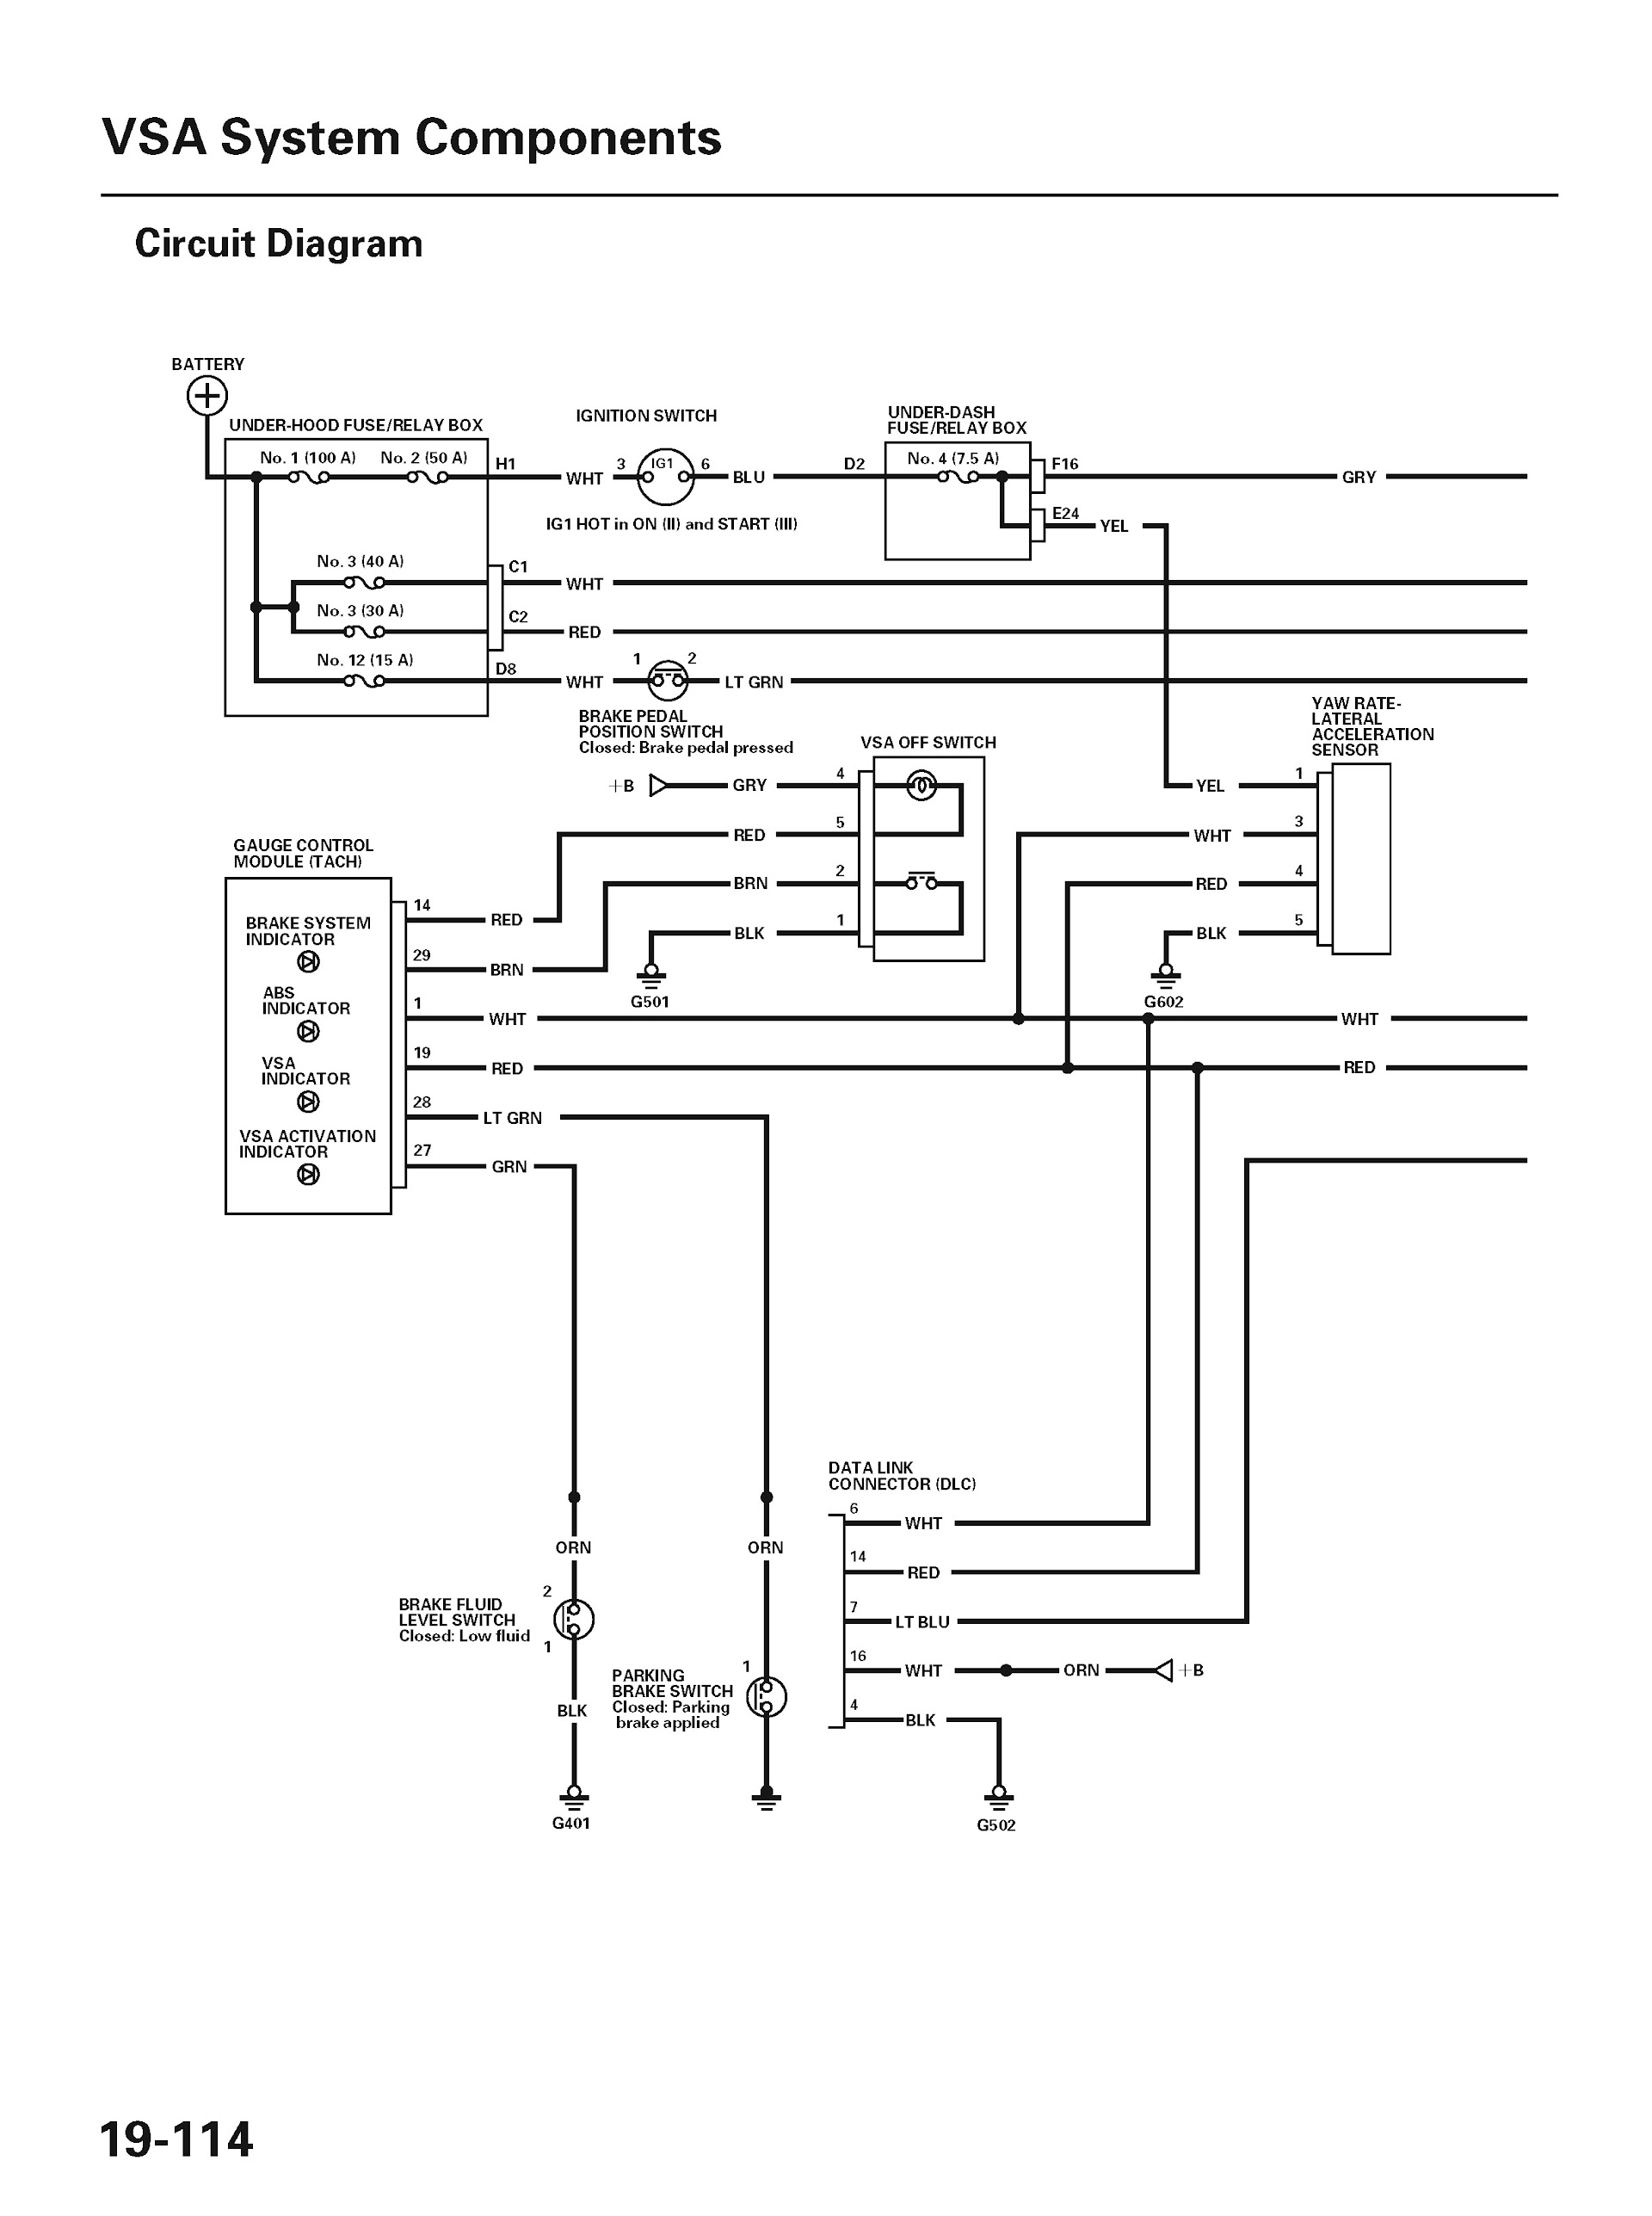 2009 Acura CSX Repair Manual, Wiring Diagram, VSA System Components